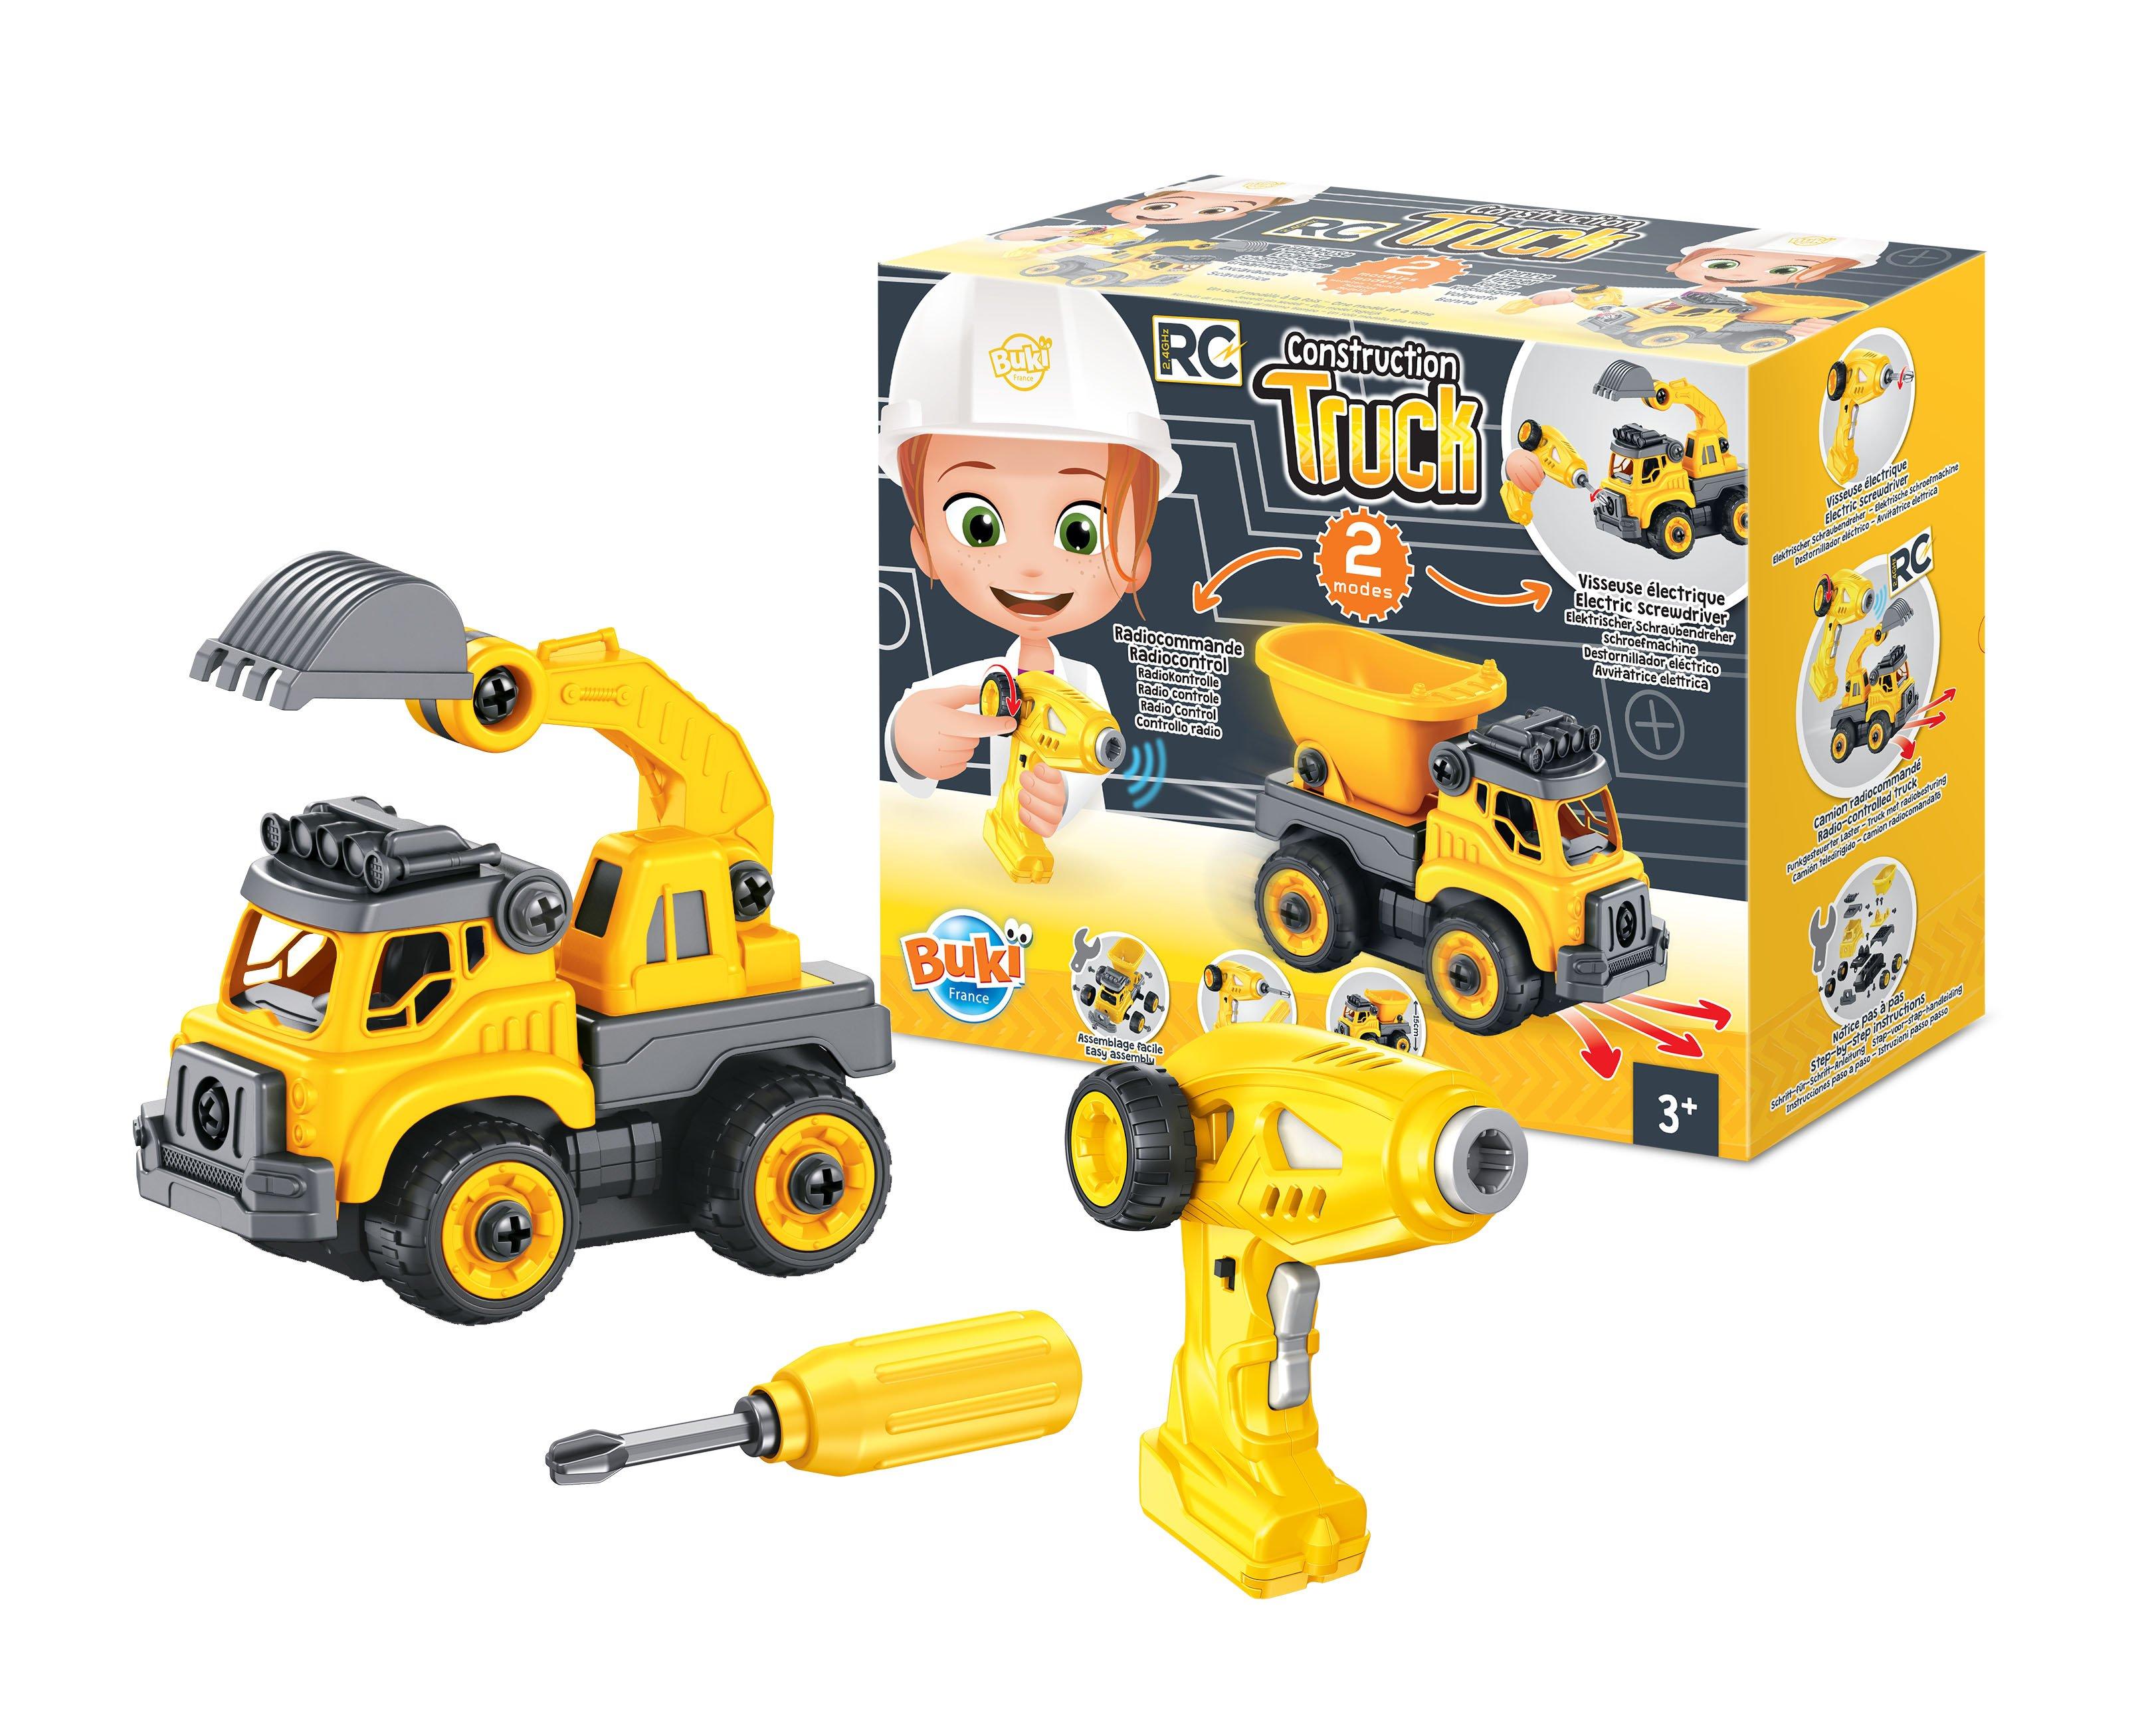 Construction Truck R/C